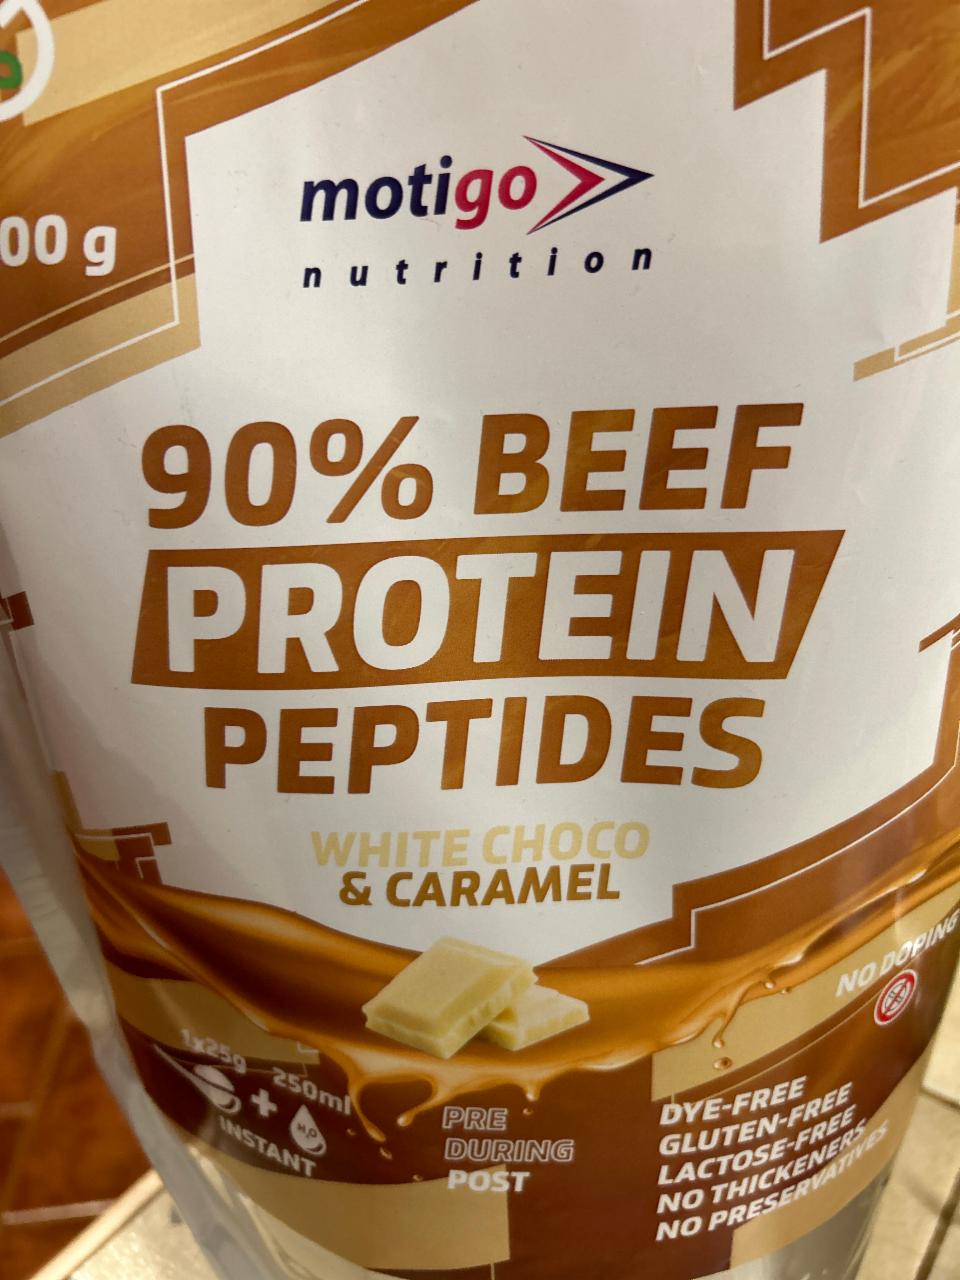 Fotografie - 90% Beef Protein Peptides White Choco & Caramel Motigo Nutrition